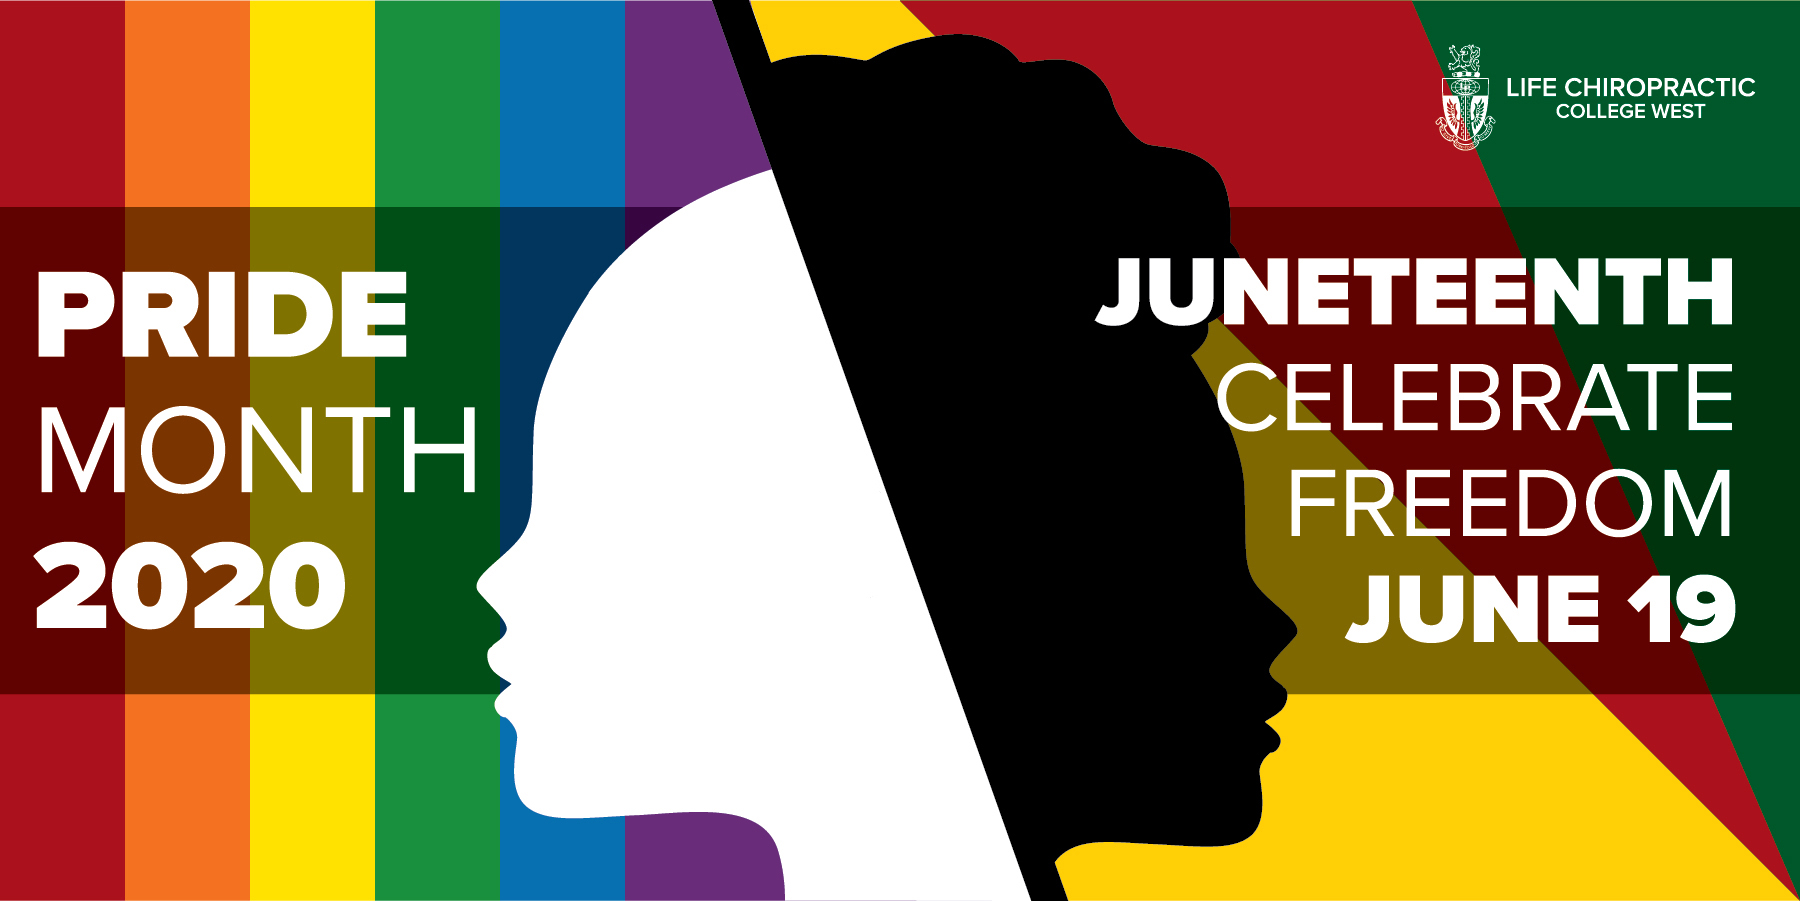 Juneteenth LGBTQ Pride Month